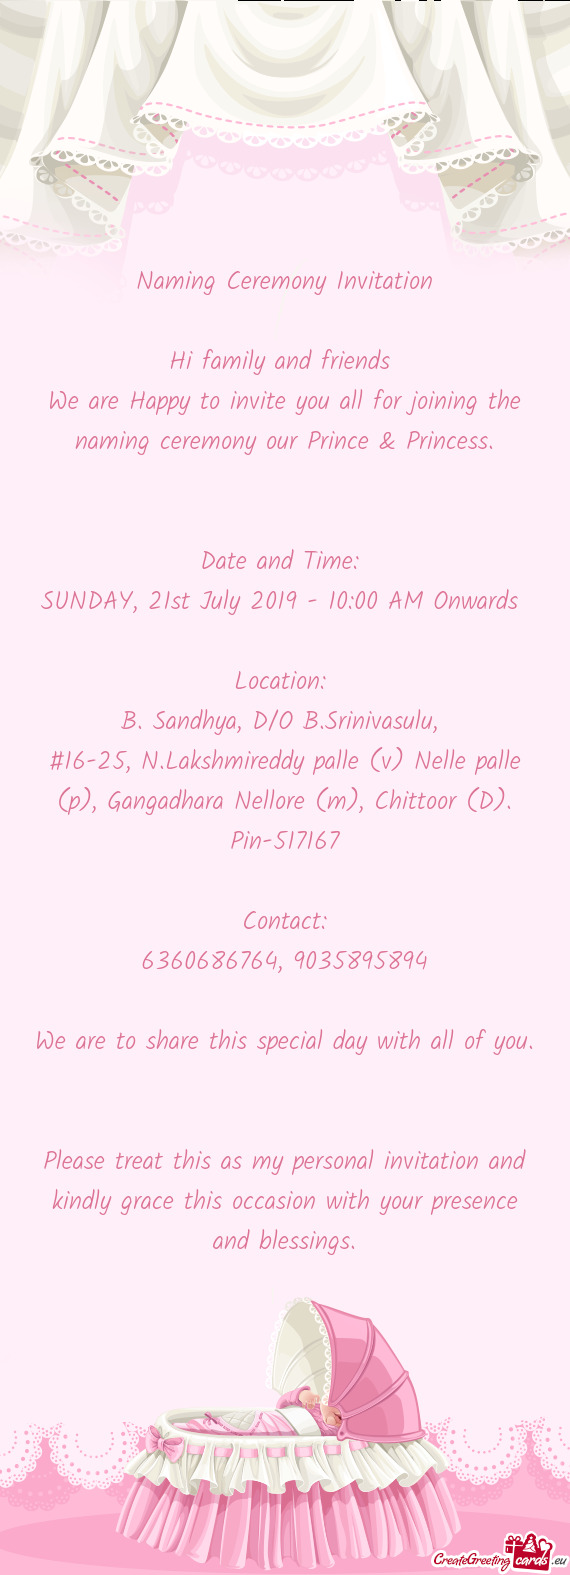 #16-25, N.Lakshmireddy palle (v) Nelle palle (p), Gangadhara Nellore (m), Chittoor (D). Pin-517167